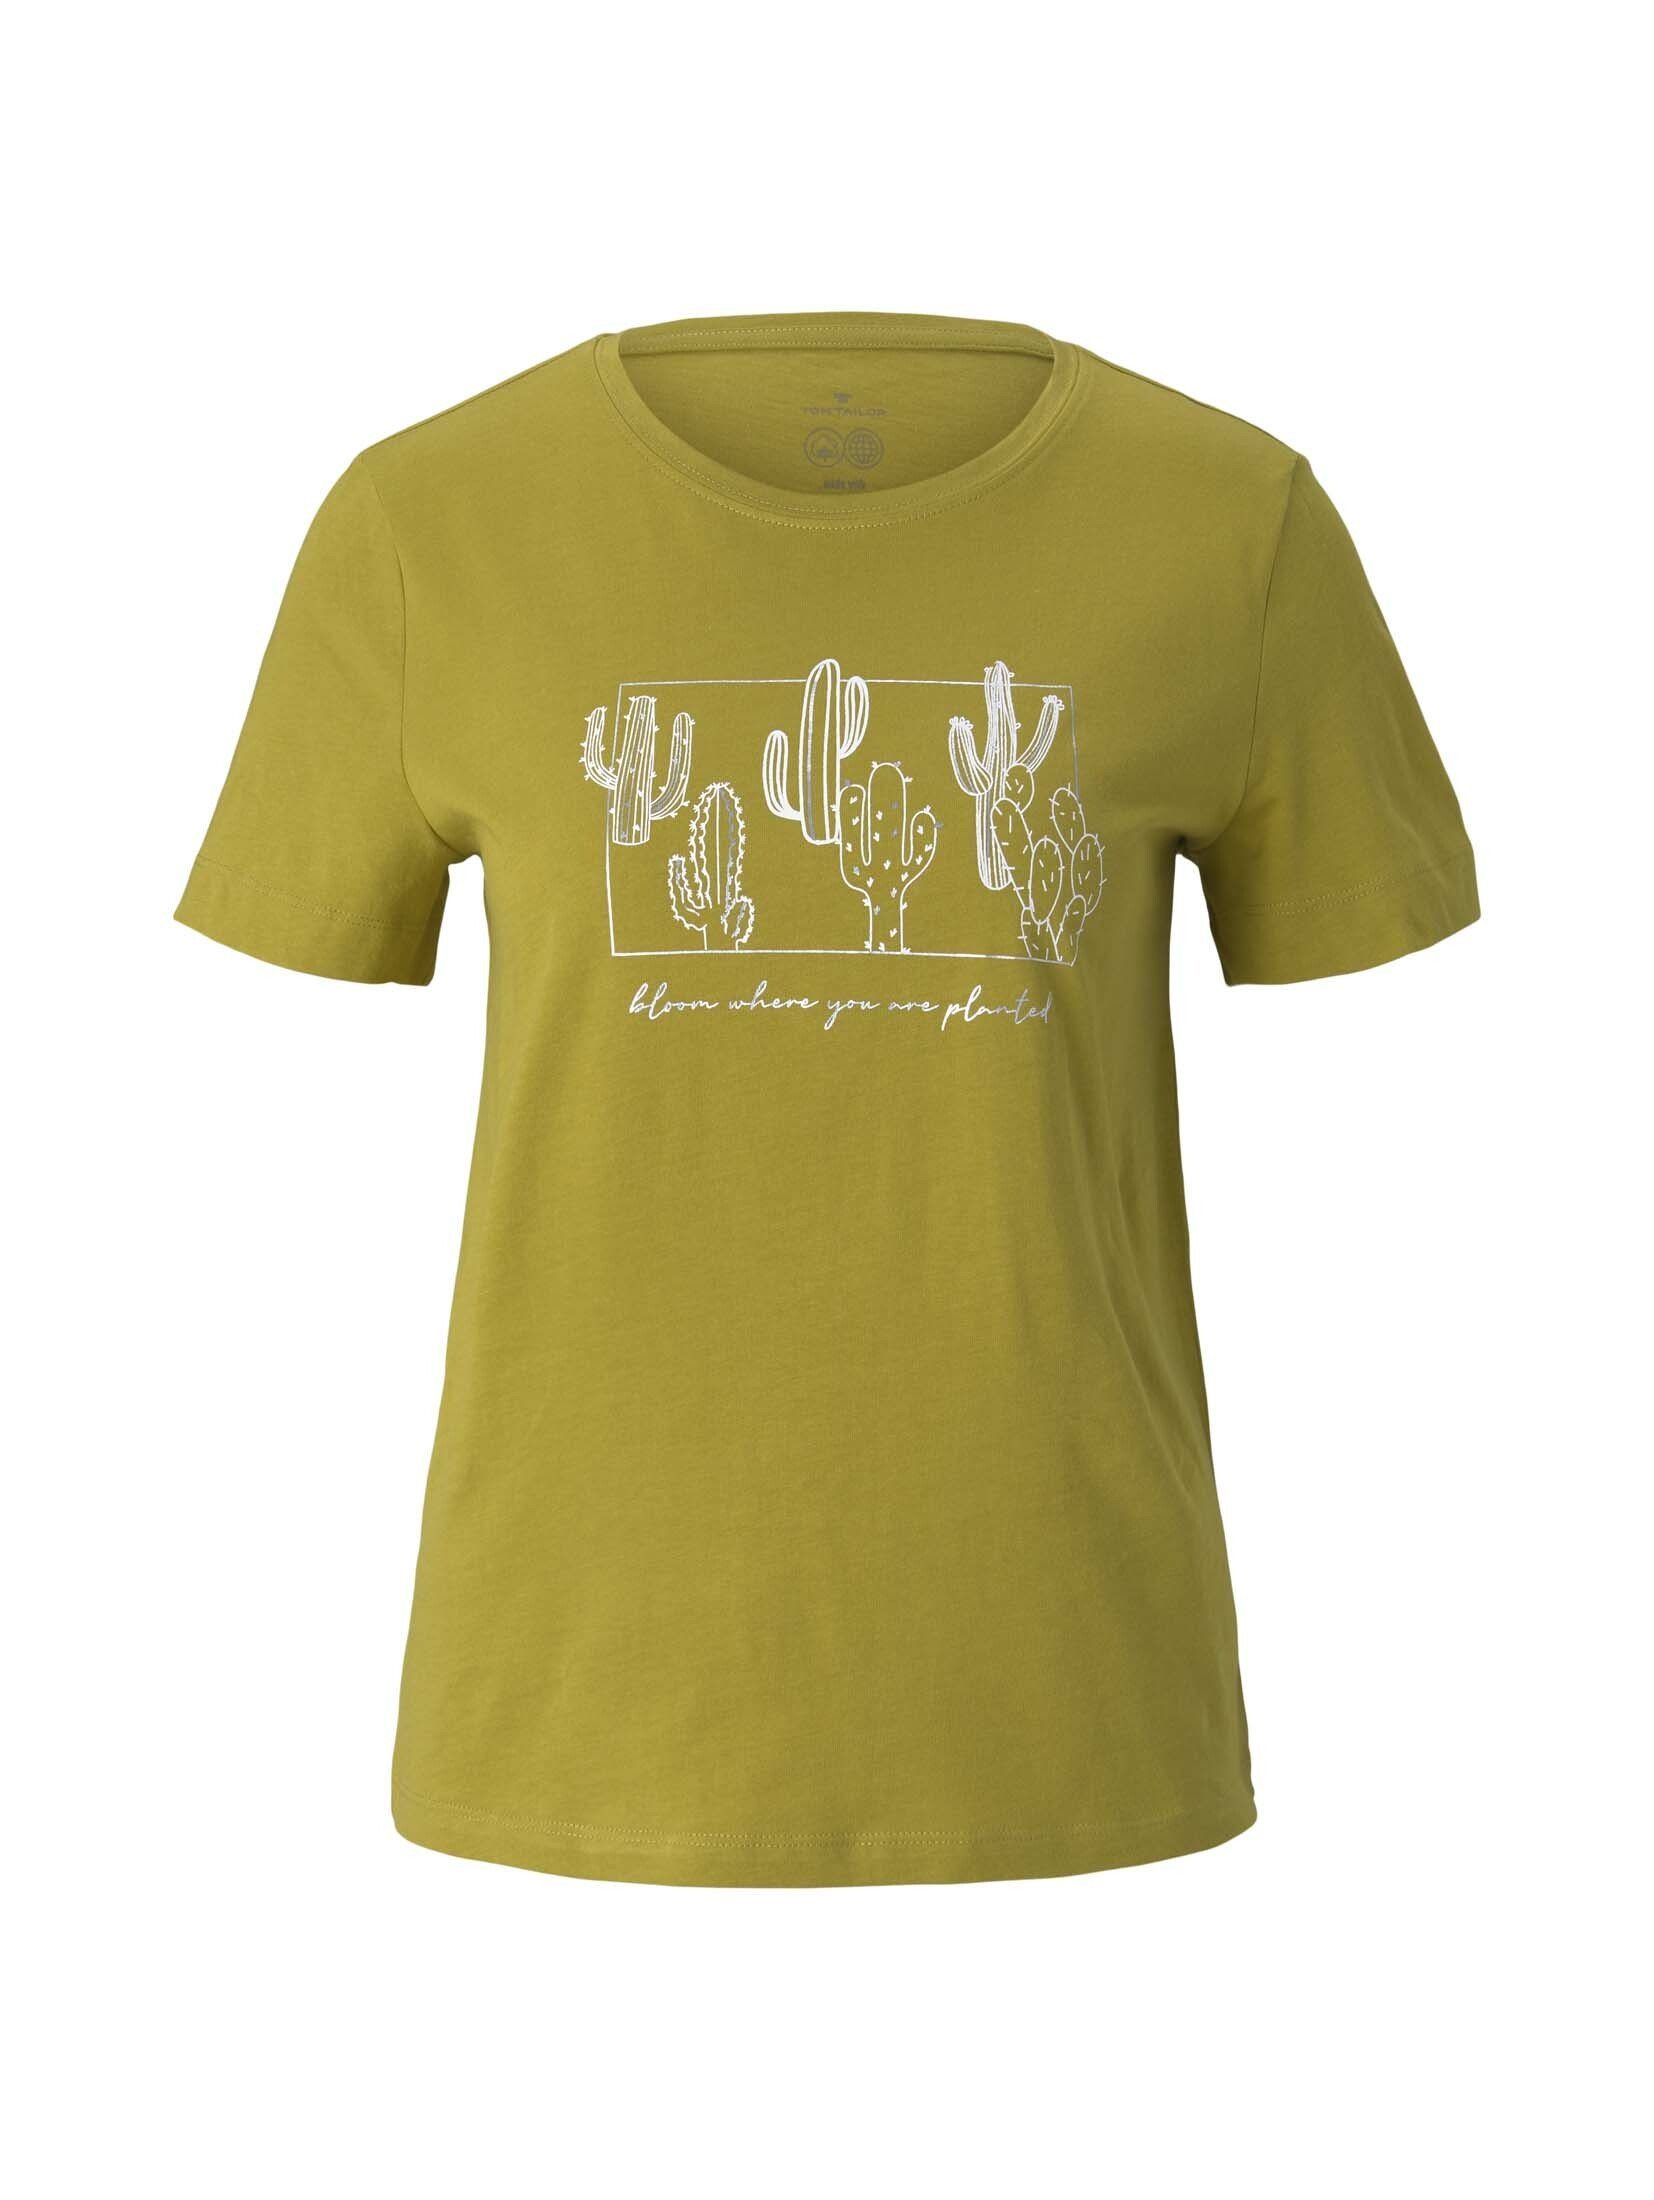 TOM TAILOR Bio-Baumwolle T-Shirt green mit T-Shirt Print gecko